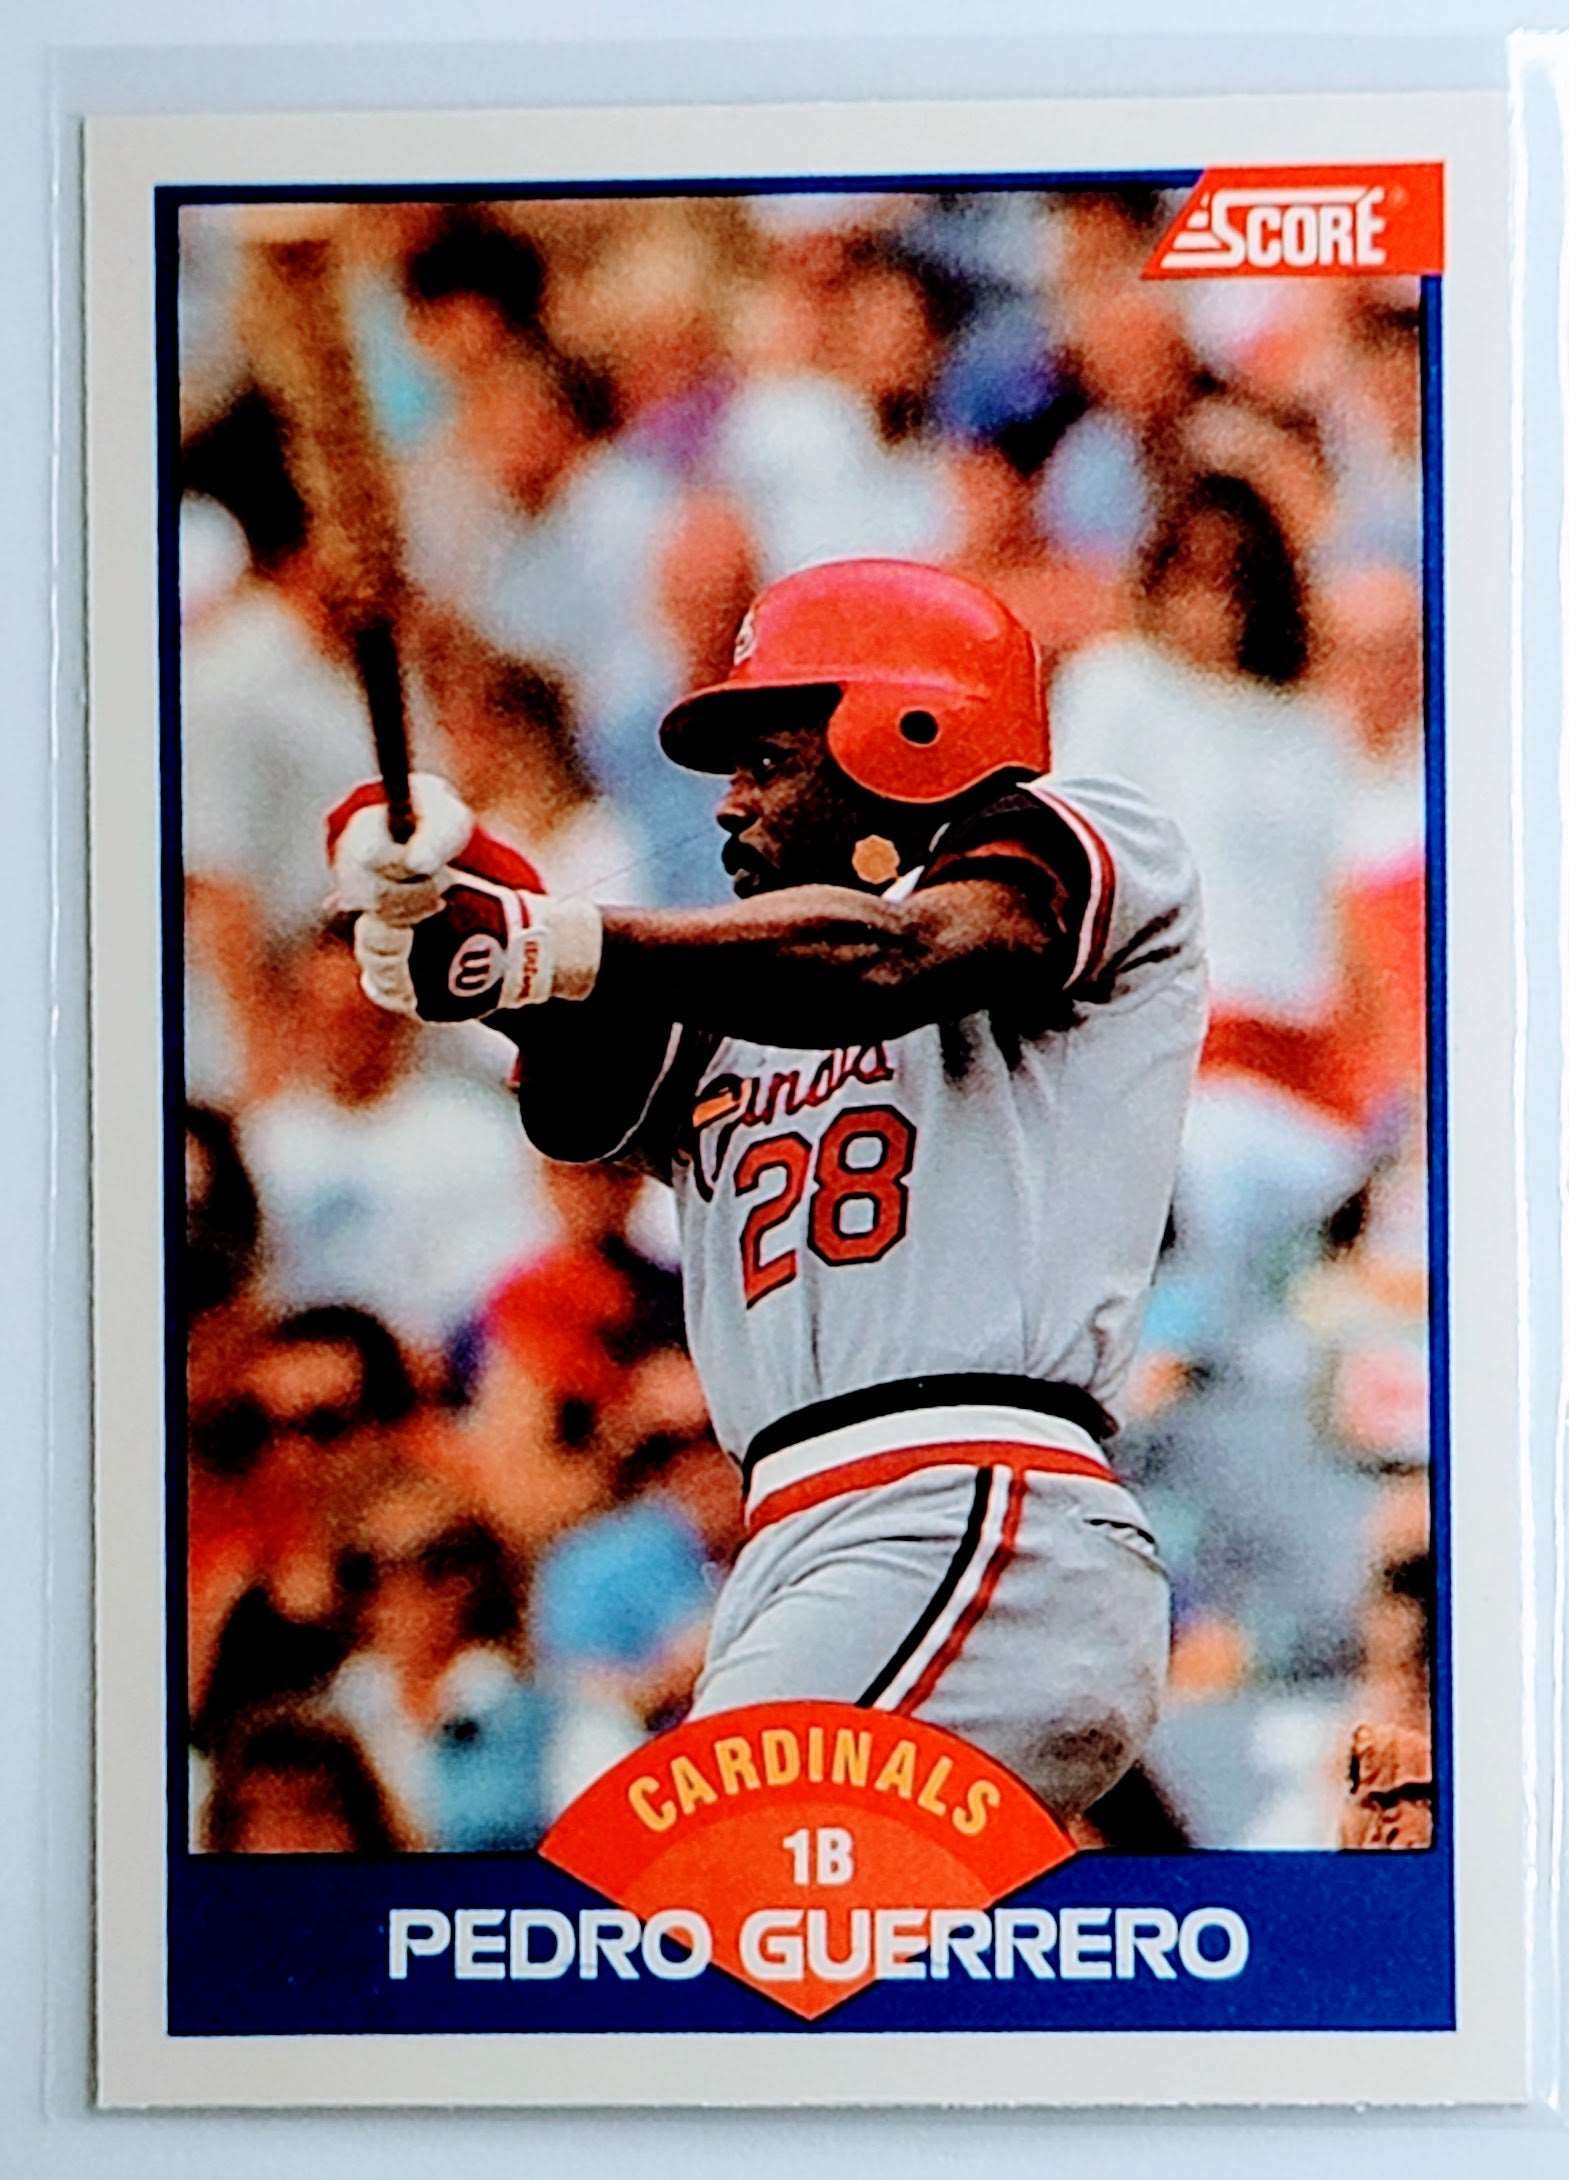 1989 Score Pedro Guerrero   St. Louis Cardinals Baseball Card TH1C4 simple Xclusive Collectibles   